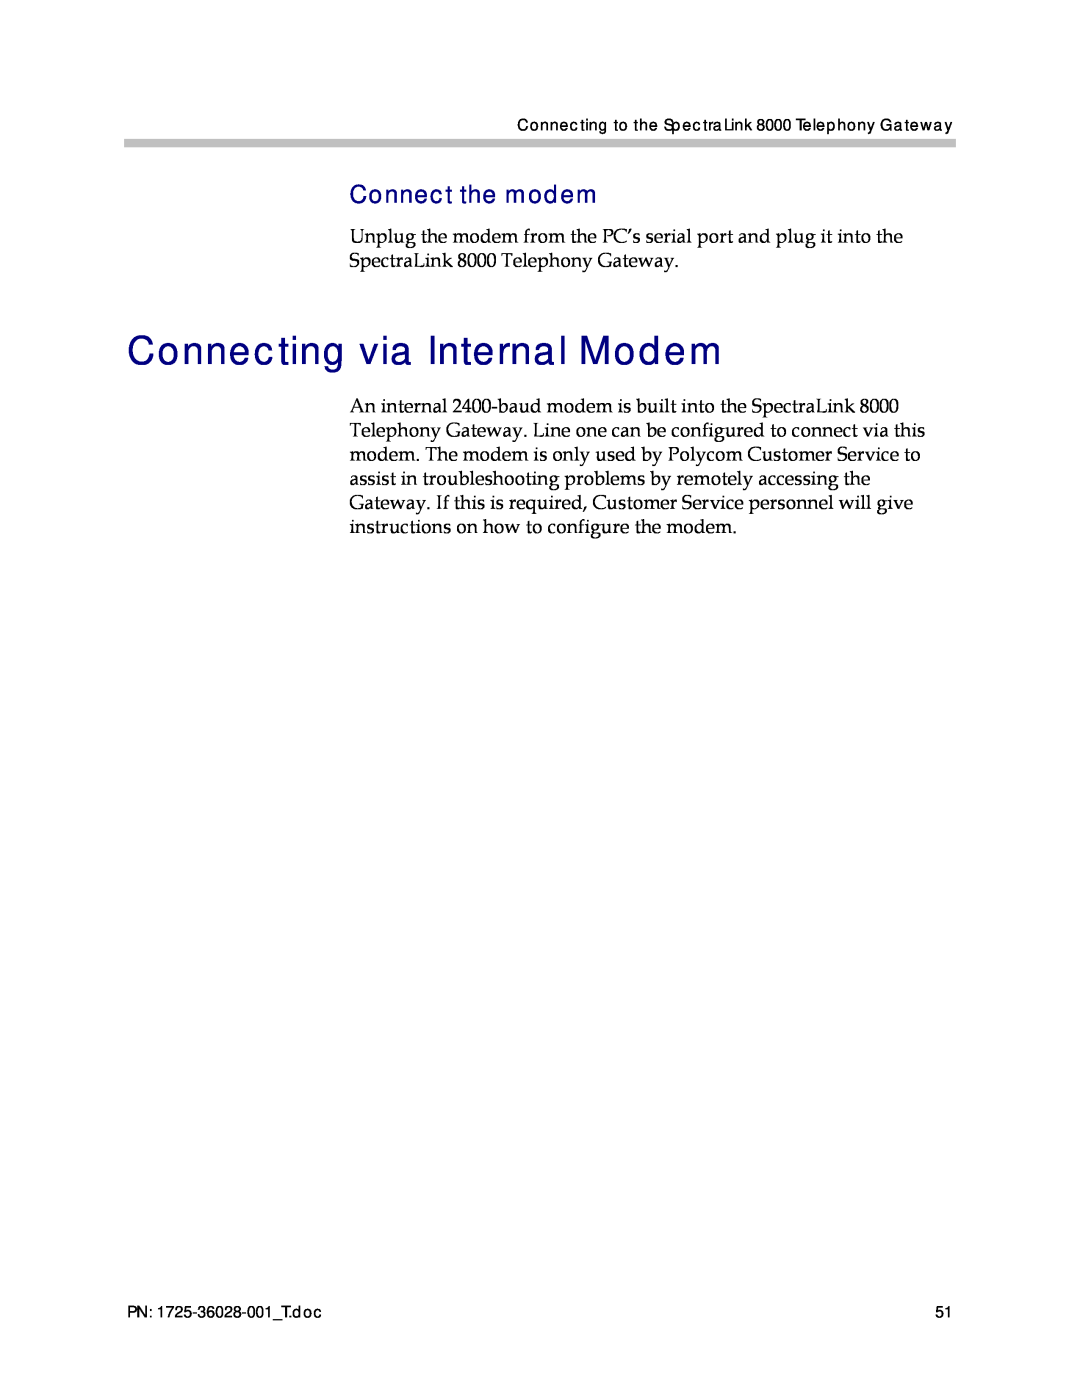 Polycom 1725-36028-001 manual Connecting via Internal Modem, Connect the modem 